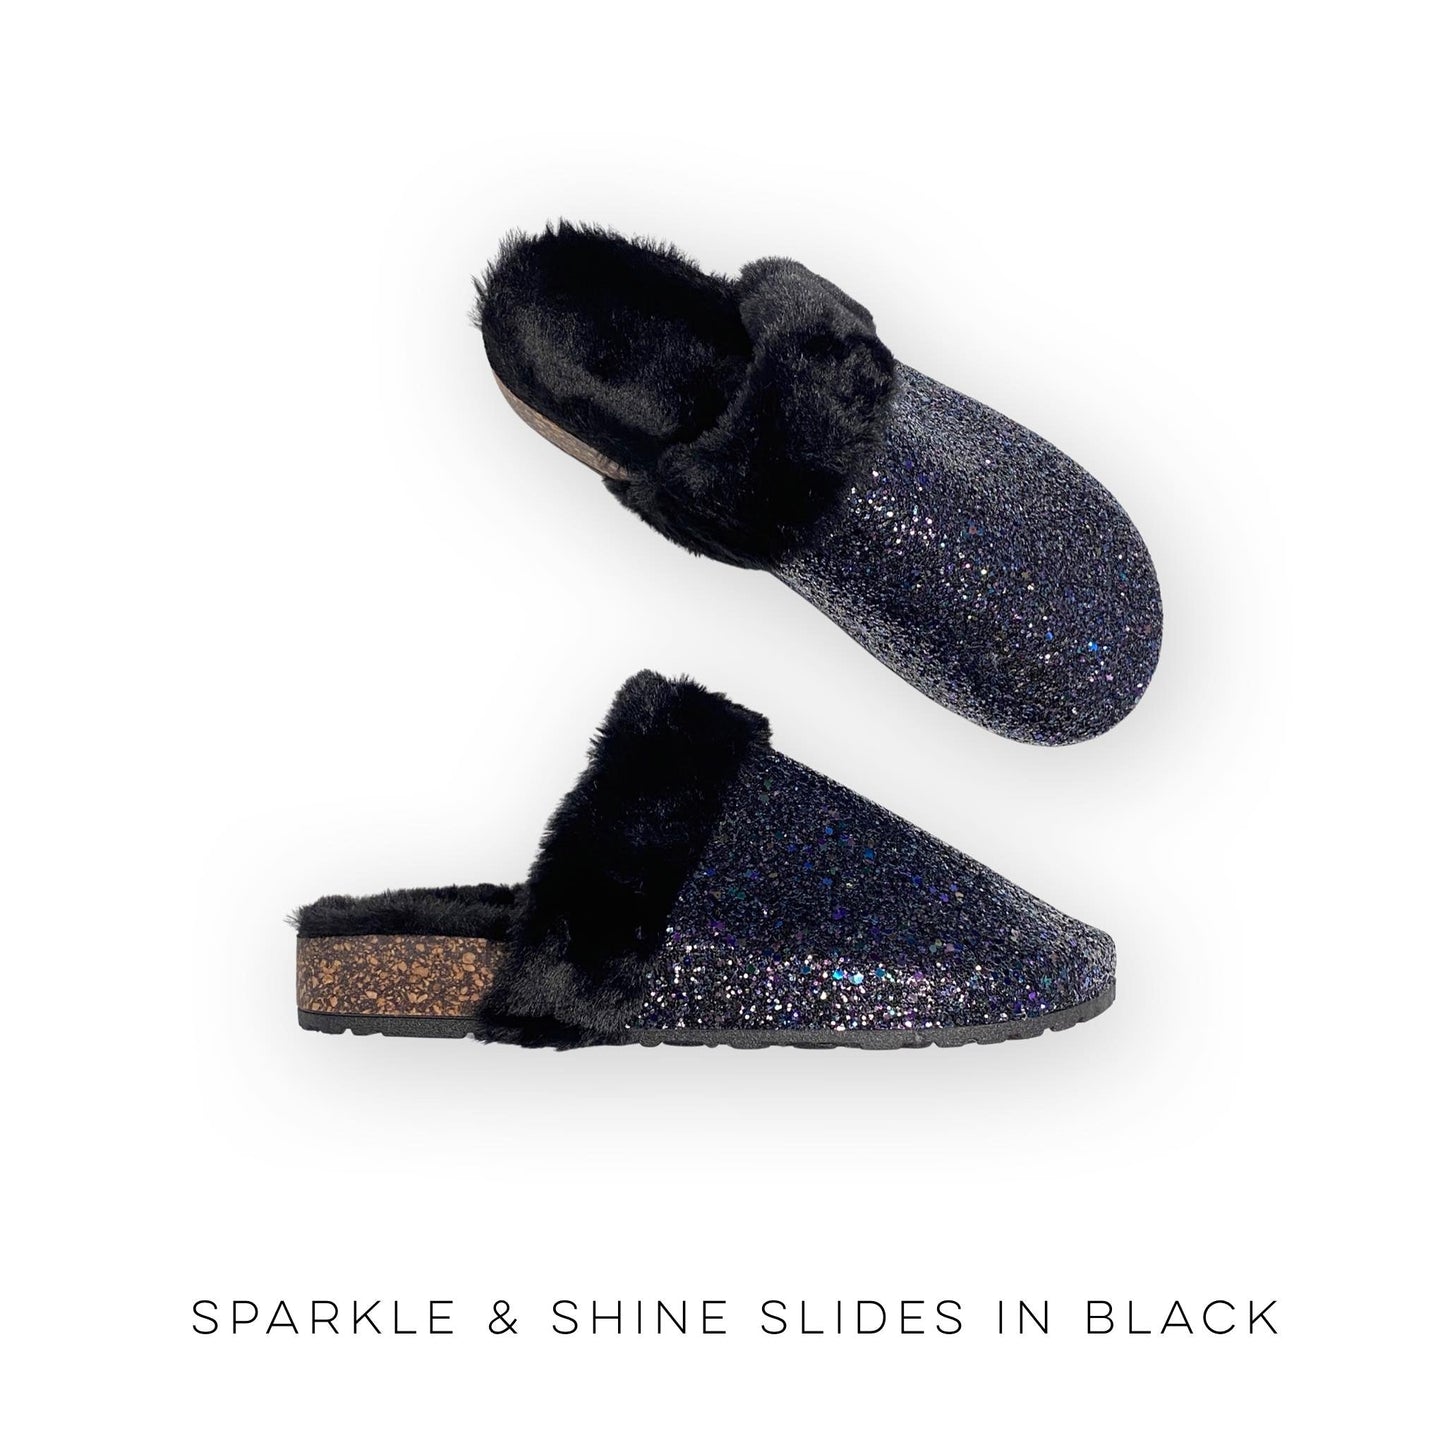 Sparkle & Shine Slides in Black